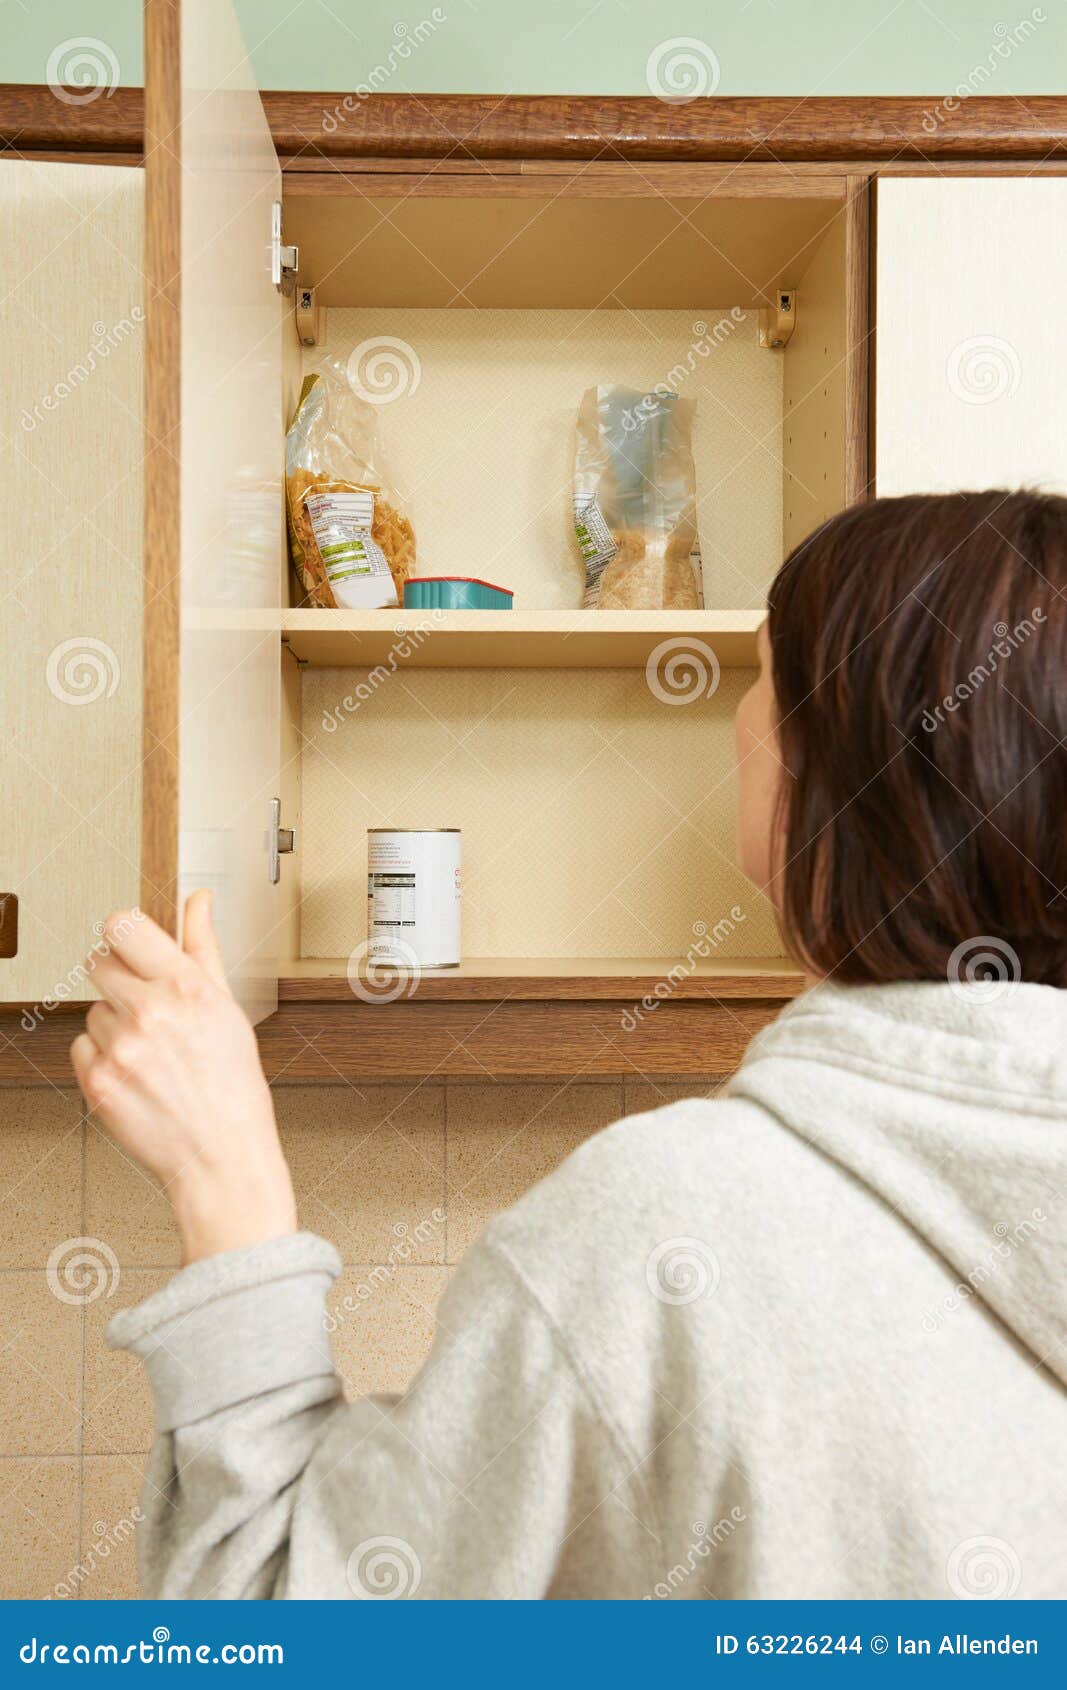 woman looking in empty food cupboards